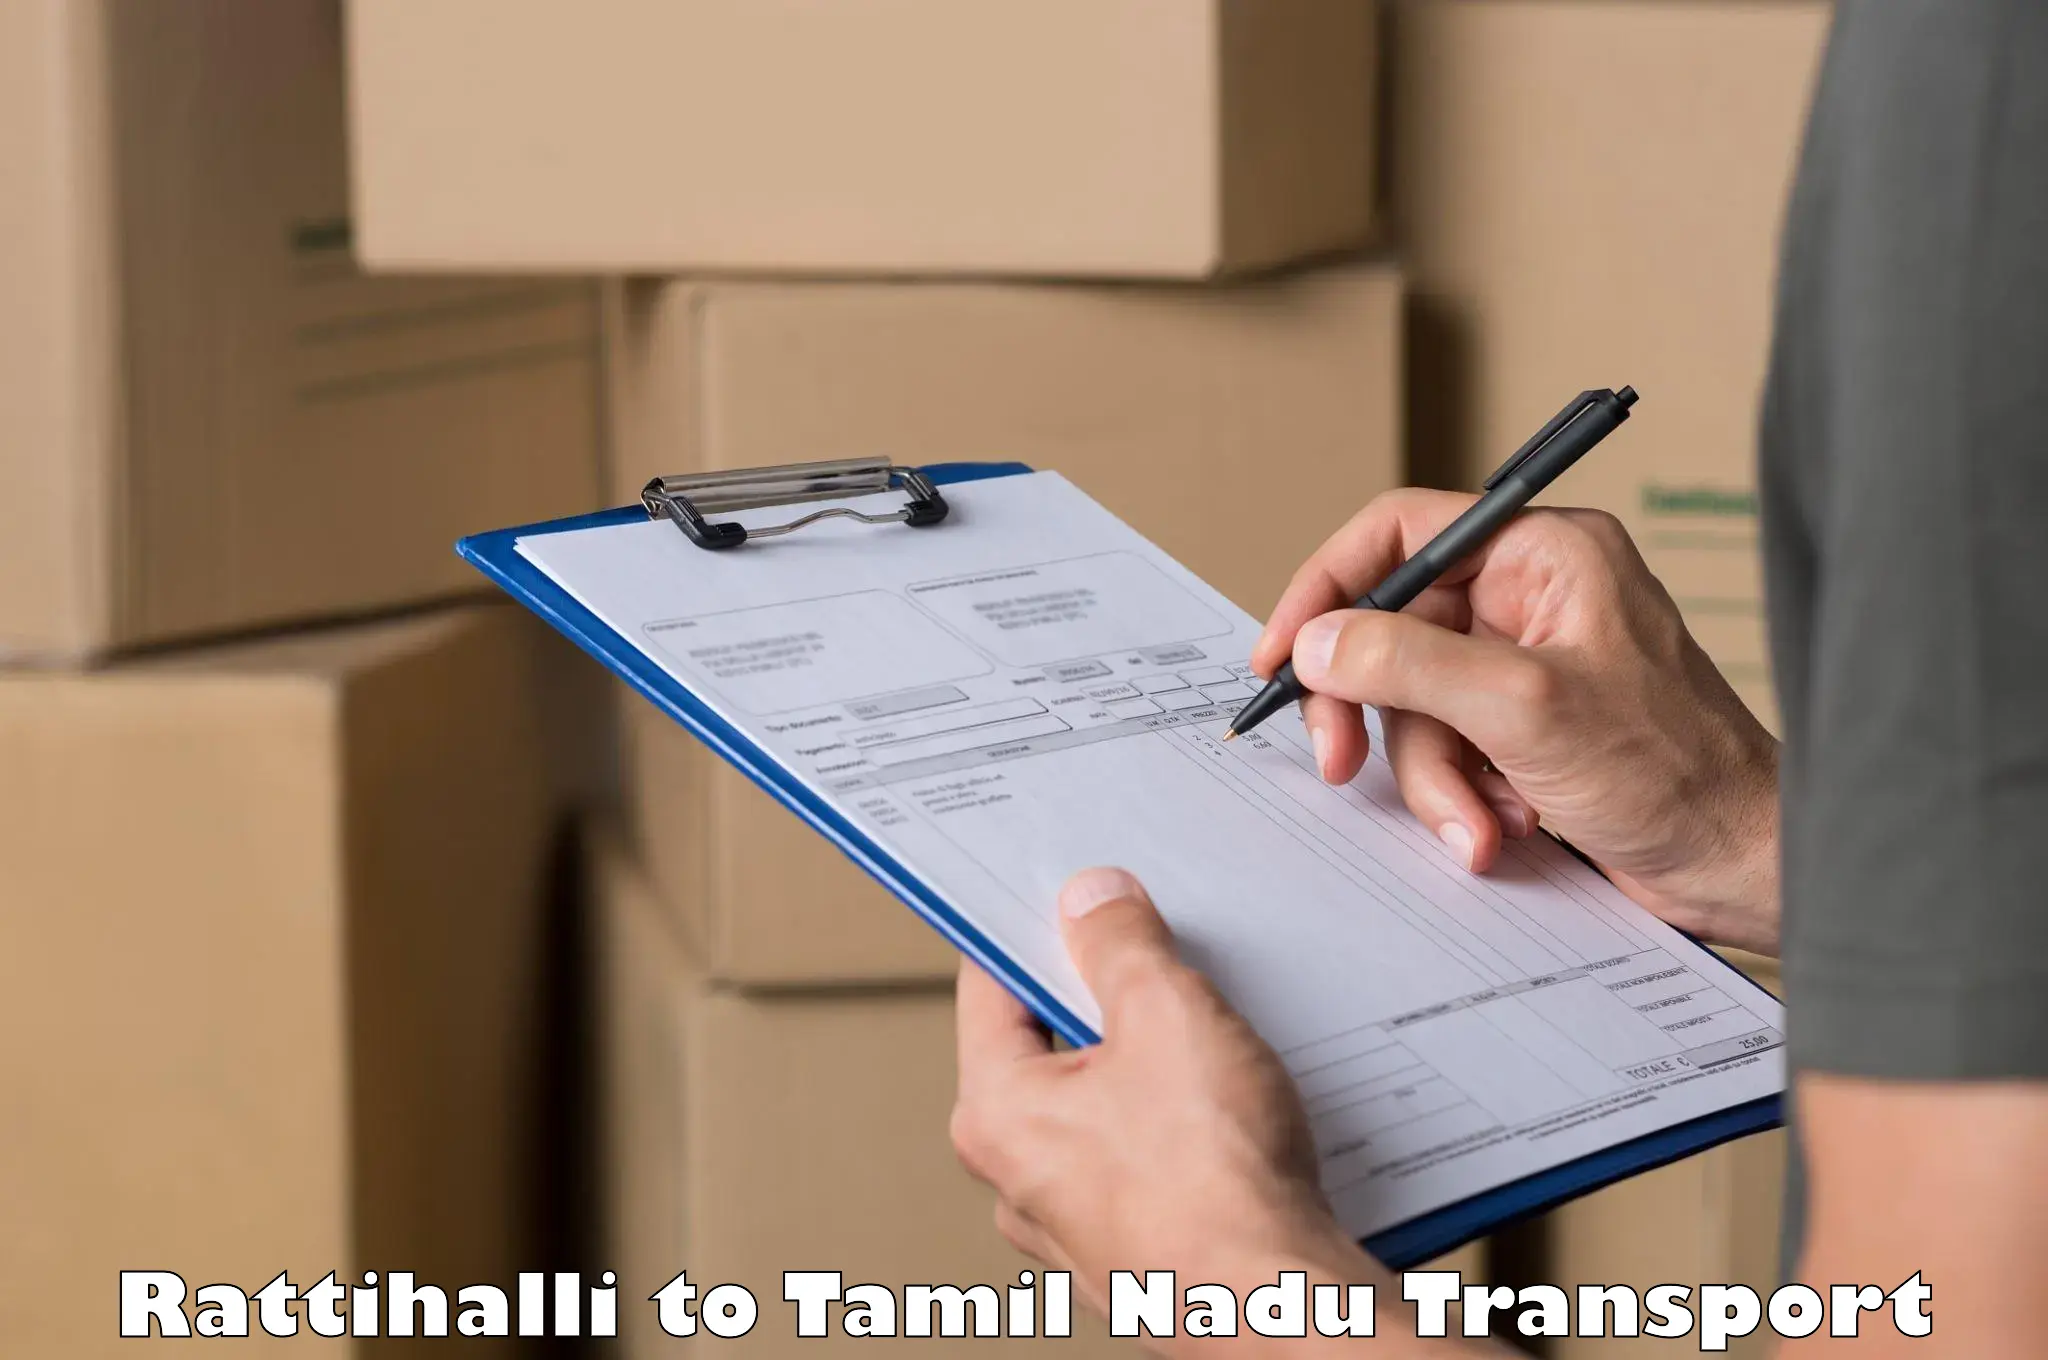 Online transport service Rattihalli to Chennai Port